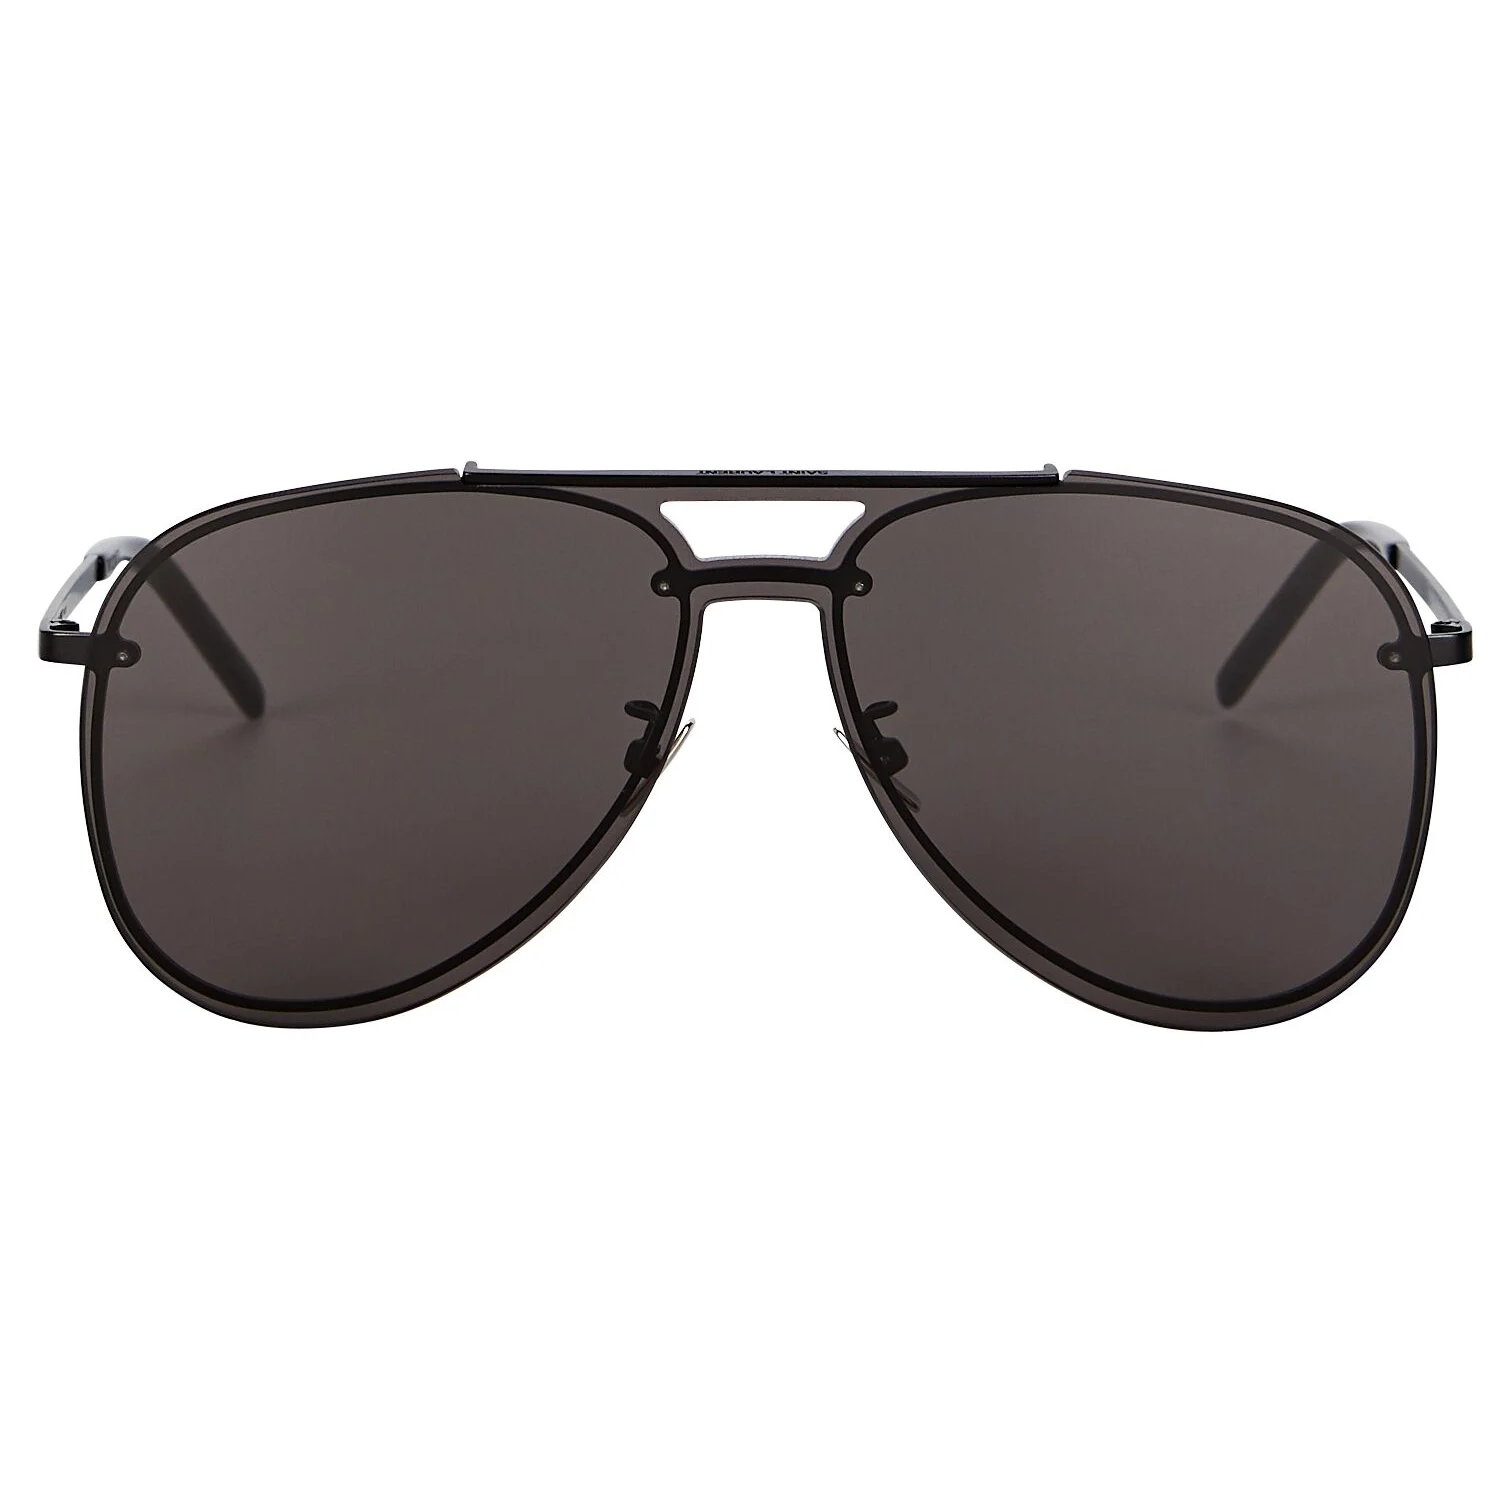 Saint Laurent Classic 11 Mask Sunglasses Purevision The Sunglasses Shop In Queens